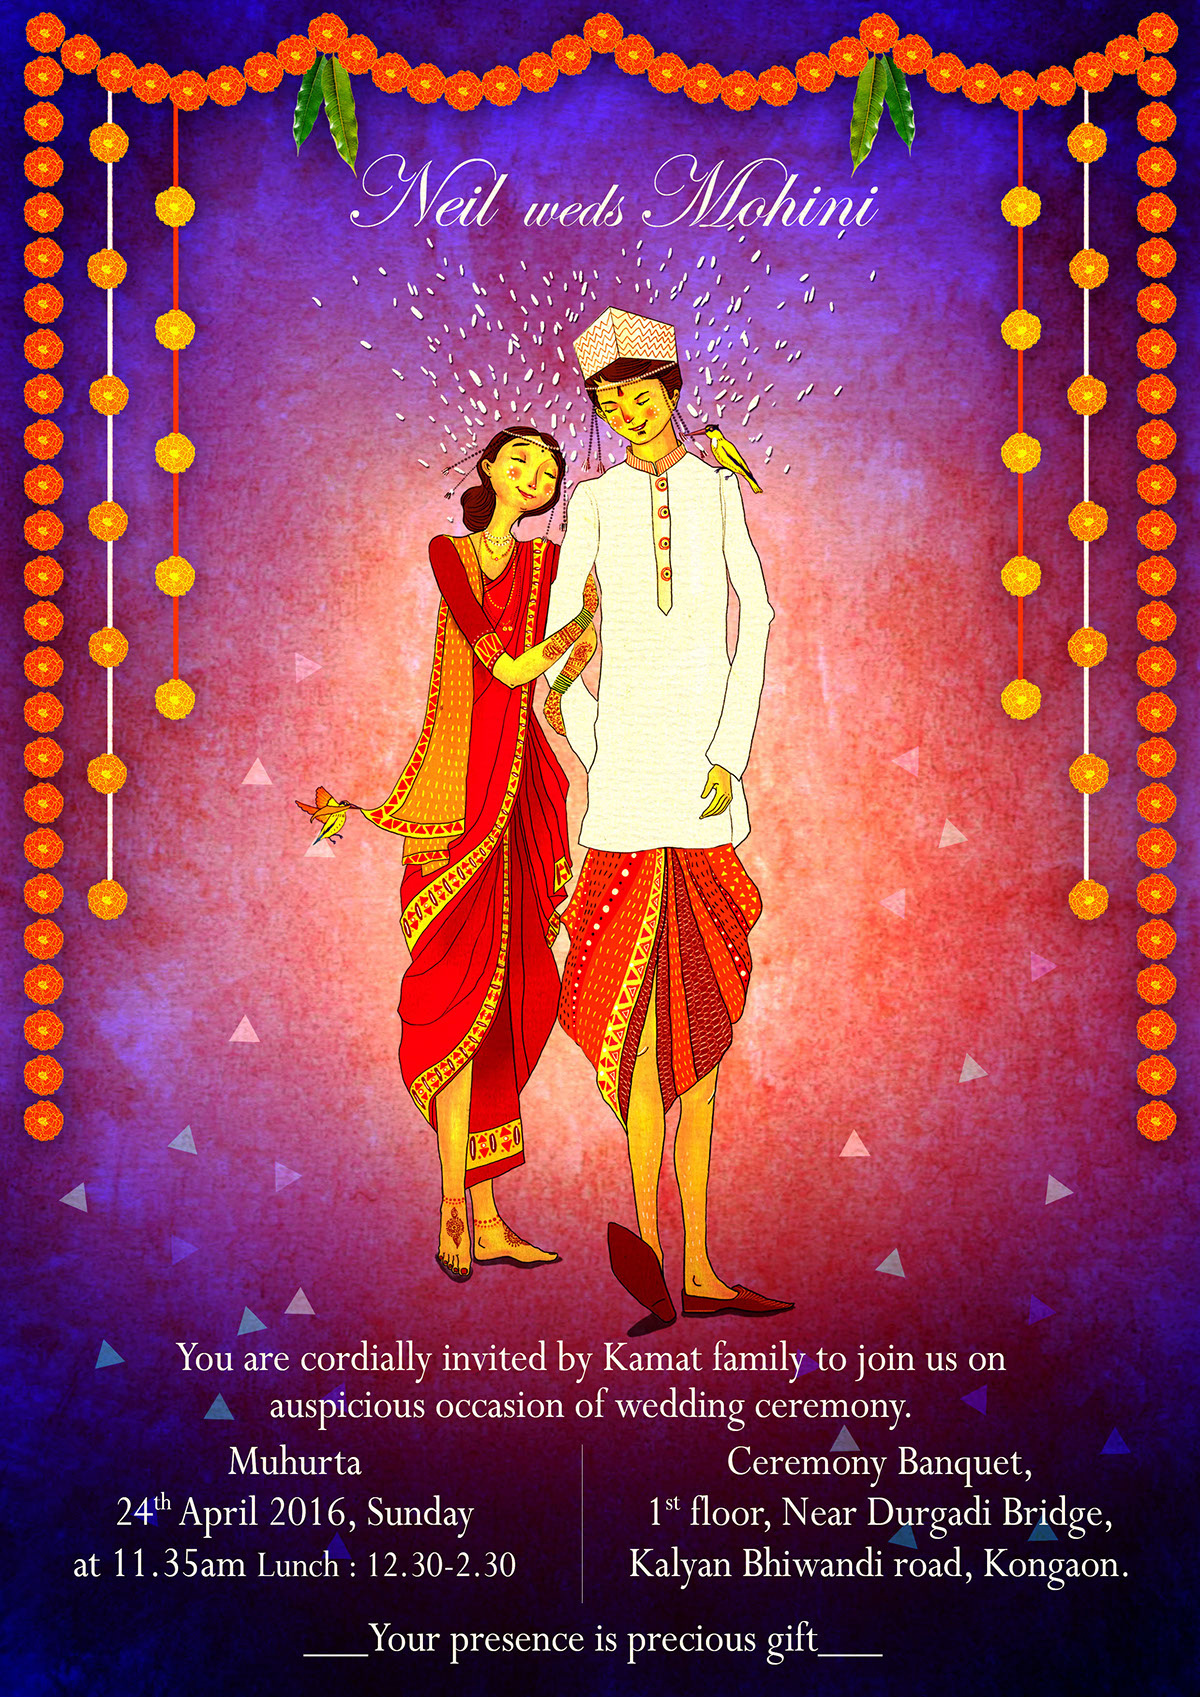 ILLUSTRATION  wedding invite couple indian wedding cards simple digital illustration characters